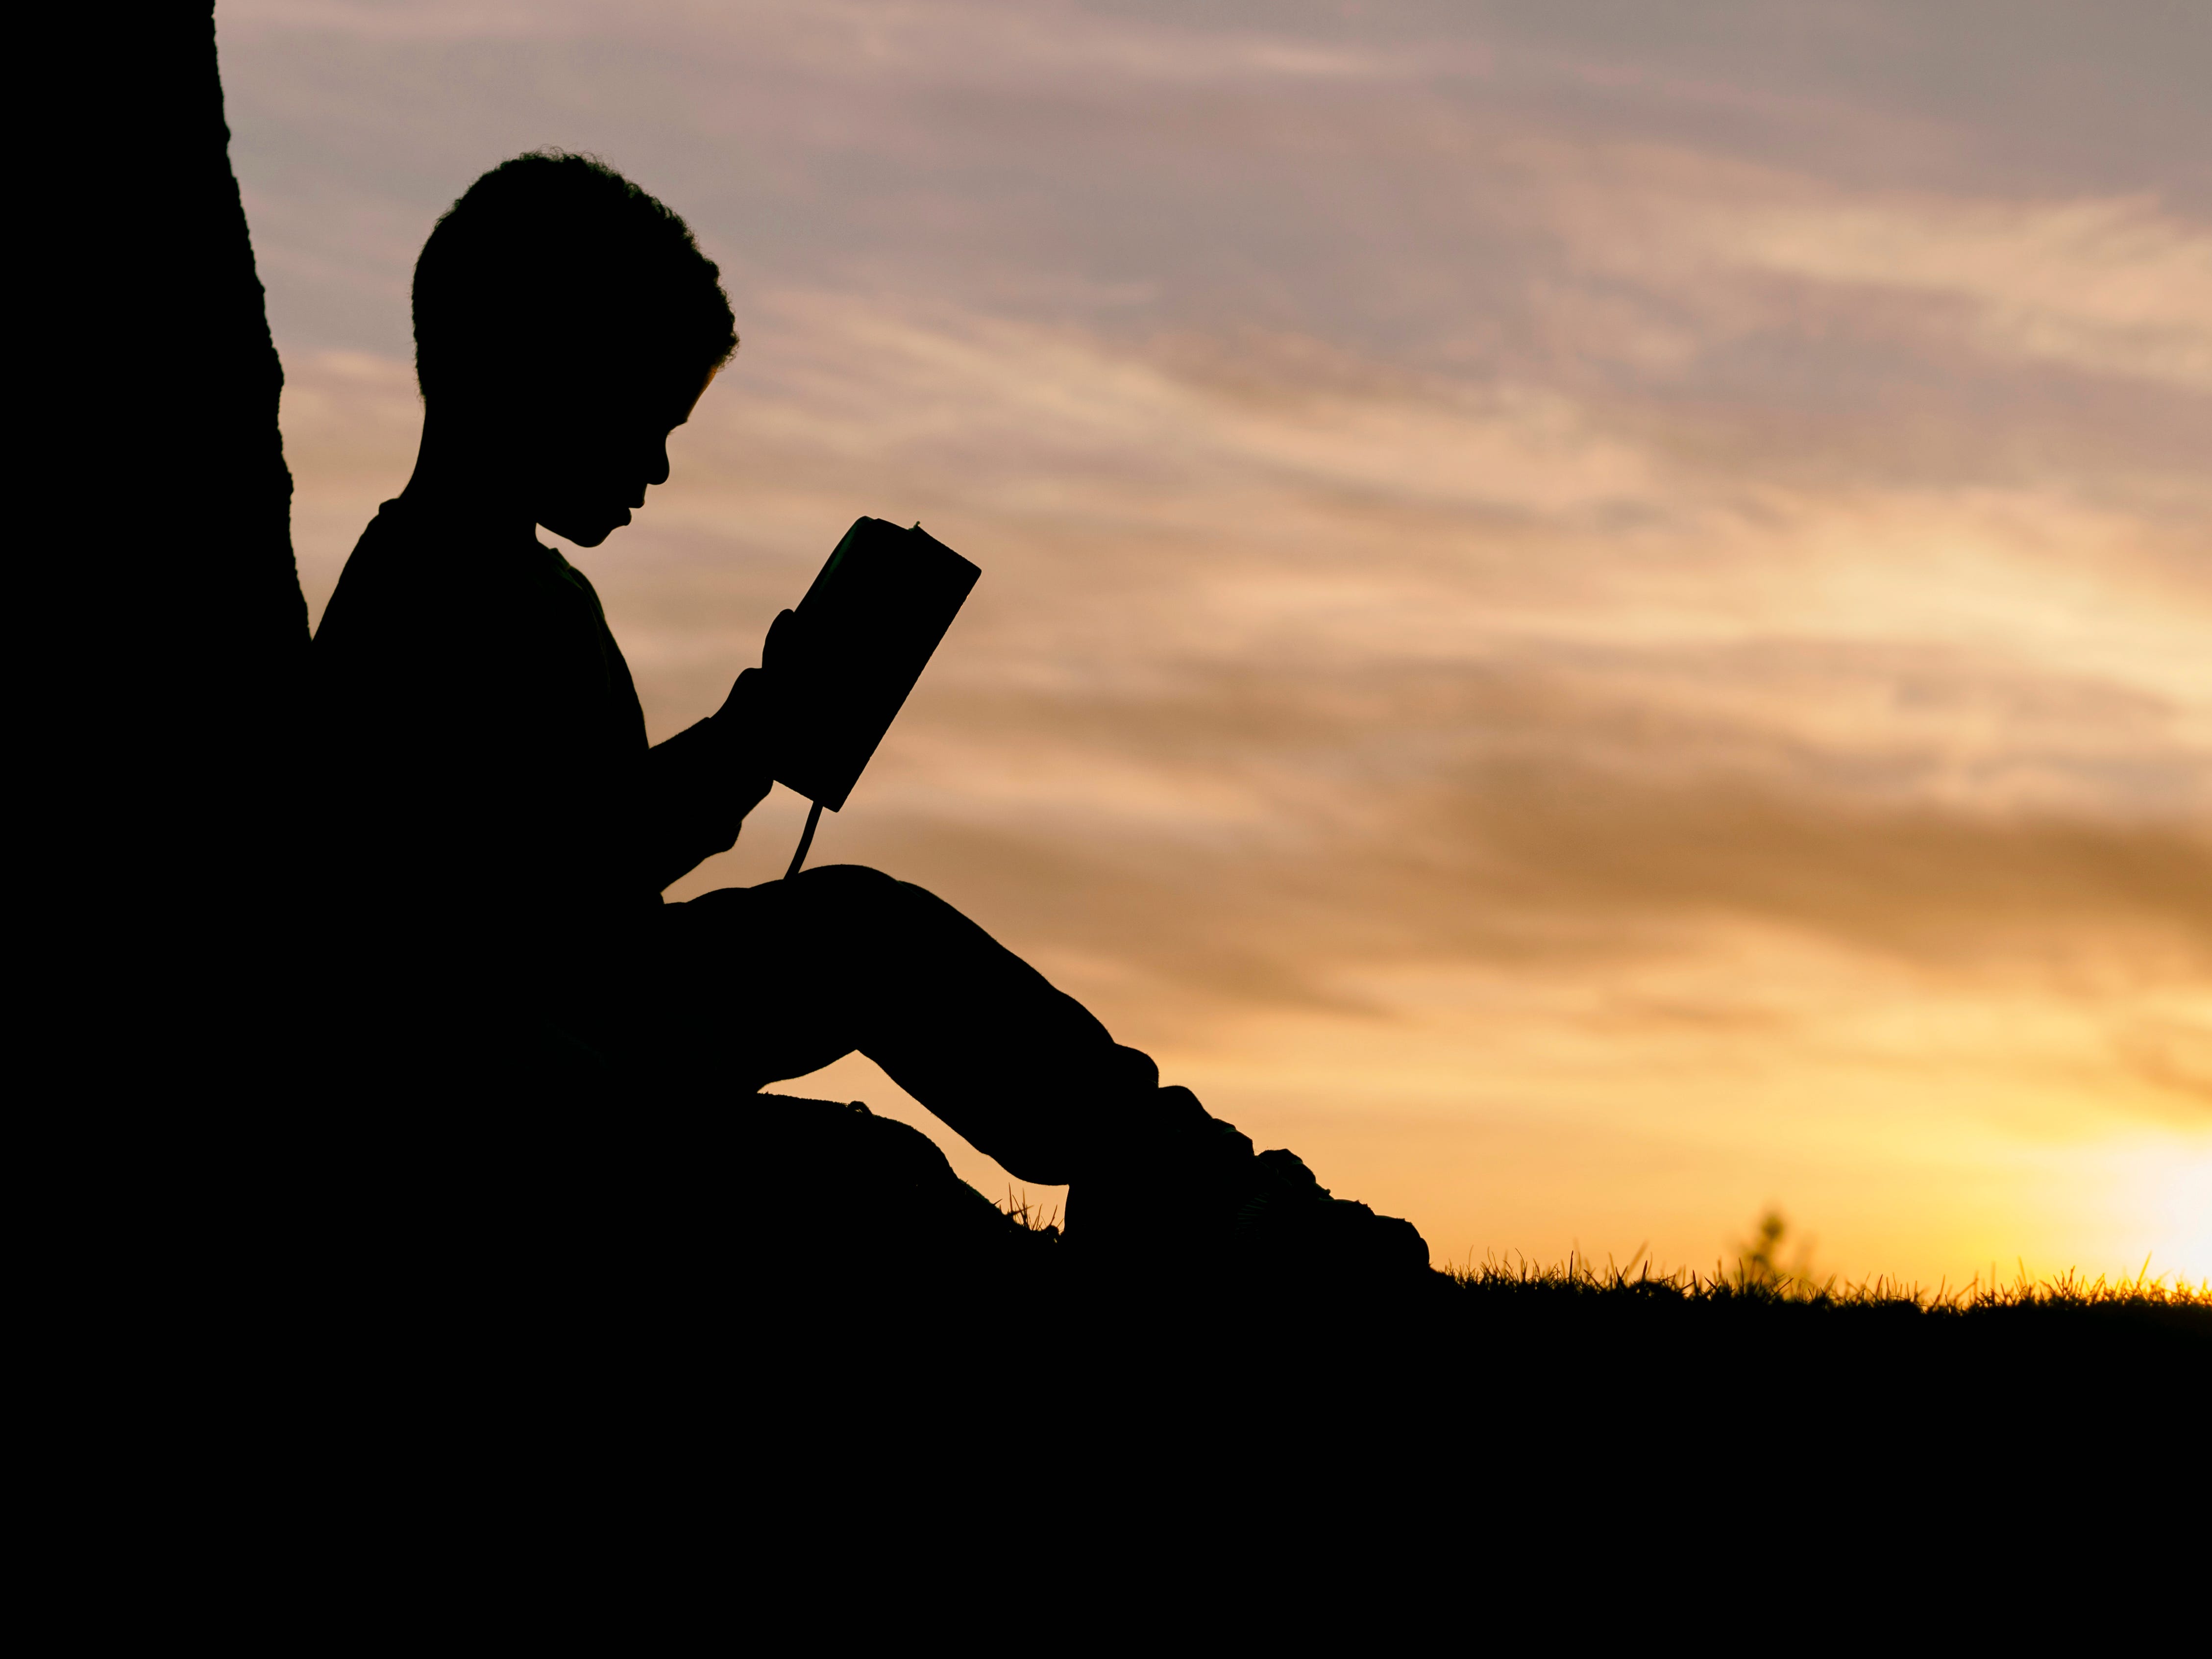 “silhouette of child sitting behind tree during sunset” by [Aaron Burden](https://unsplash.com/@aaronburden?utm_source=medium&utm_medium=referral) on [Unsplash](https://unsplash.com?utm_source=medium&utm_medium=referral)